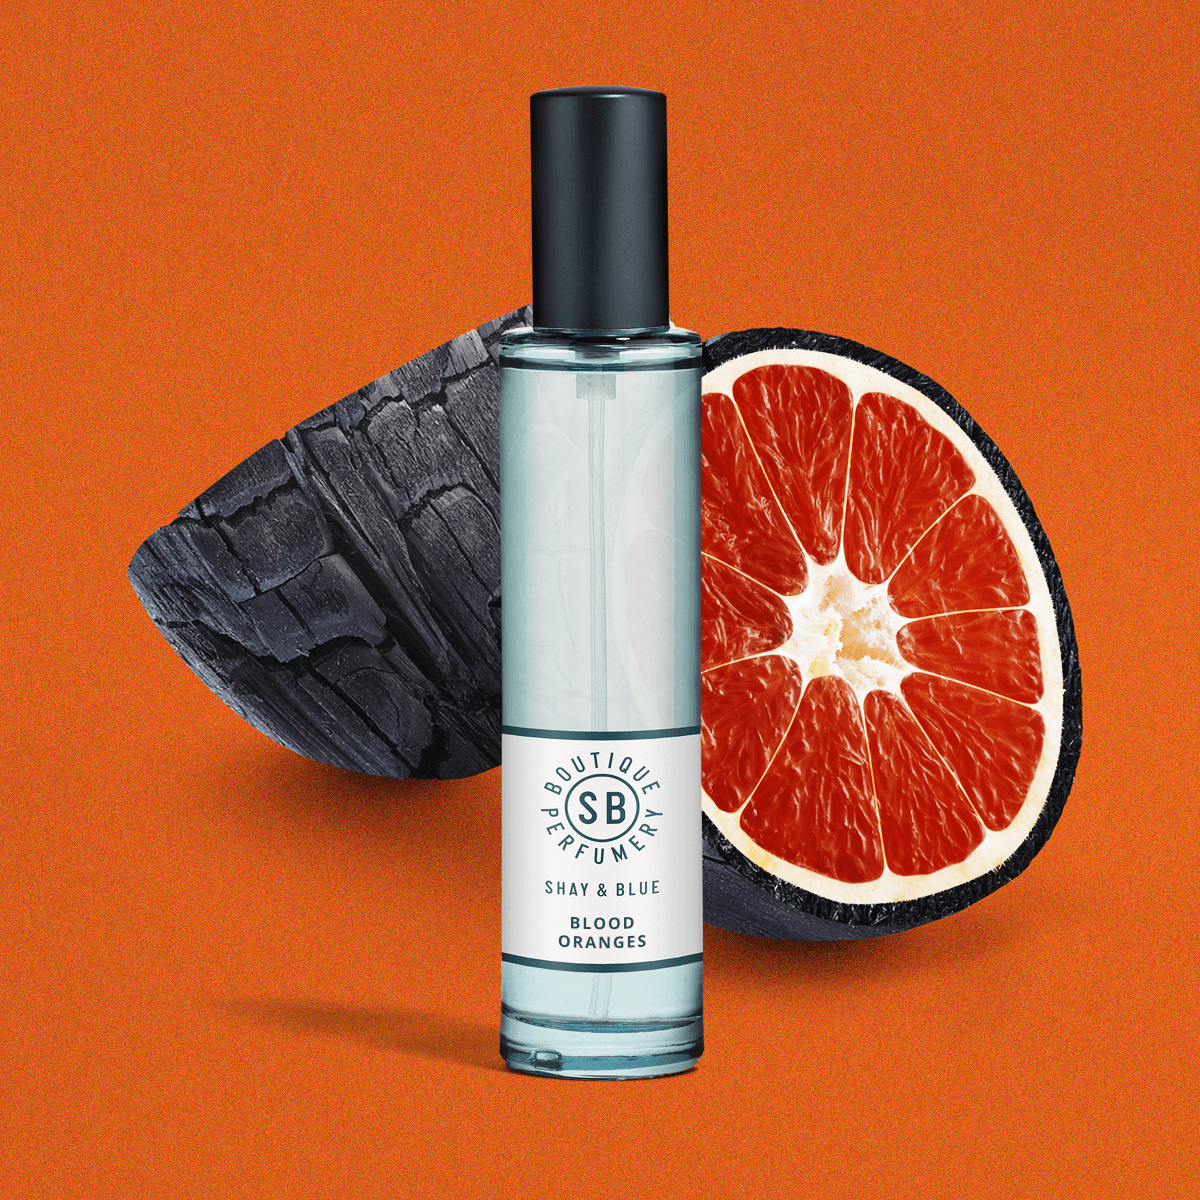 Blood Oranges Fragrance 30ml | Arance sanguigne saporite con una miscela ricca e sensuale di legni e cuoio affumicato. | Fragranza pulita per tutti i generi | Shay & Blue